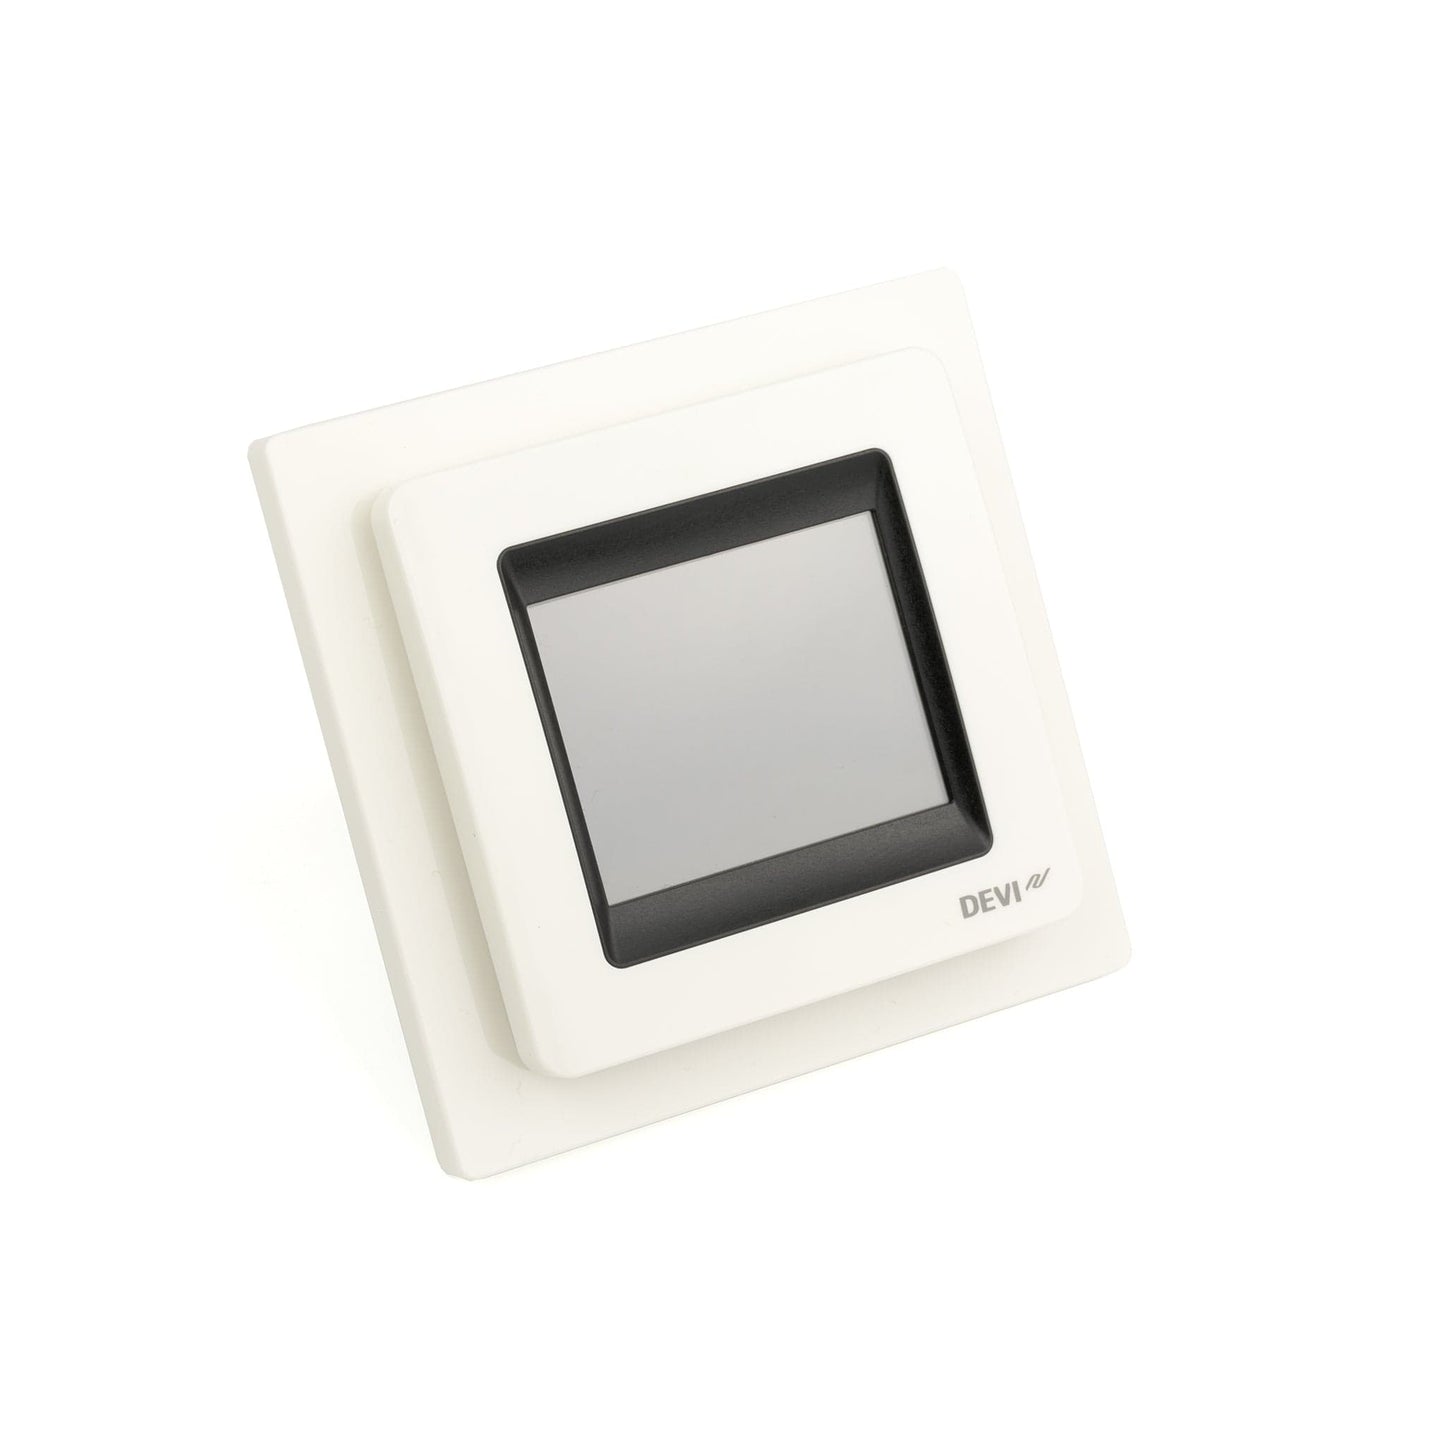 Danfoss DEVIreg™ Touch Pure White Thermostat BM01561